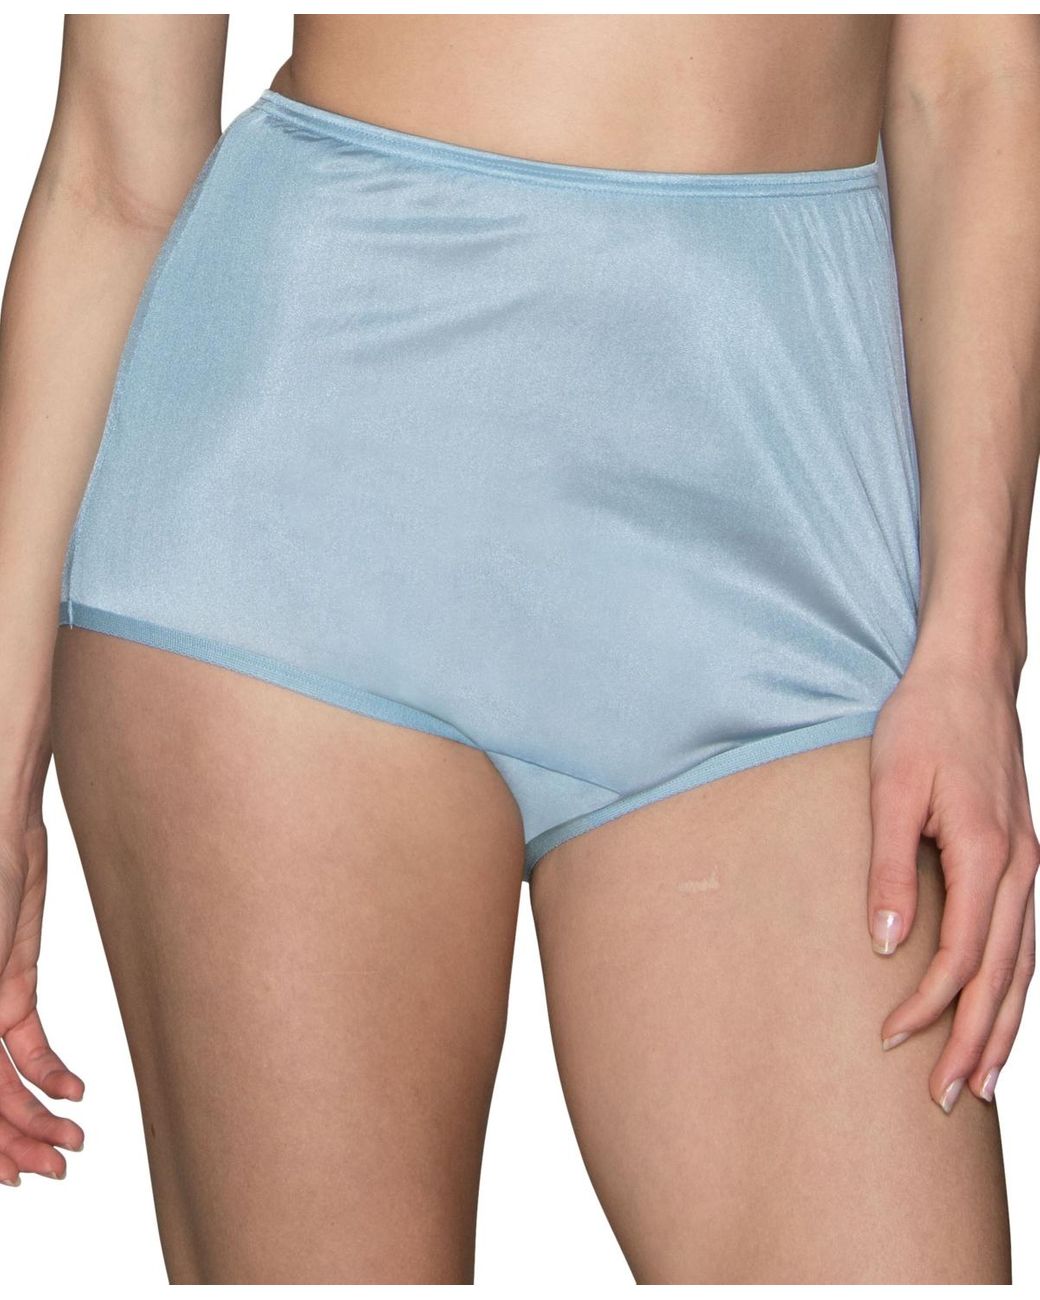 https://cdna.lystit.com/1040/1300/n/photos/macys/fc806196/vanity-fair-Seaside-Mist-Perfectly-Yours-Ravissant-Nylon-Full-Brief-Underwear-15712.jpeg